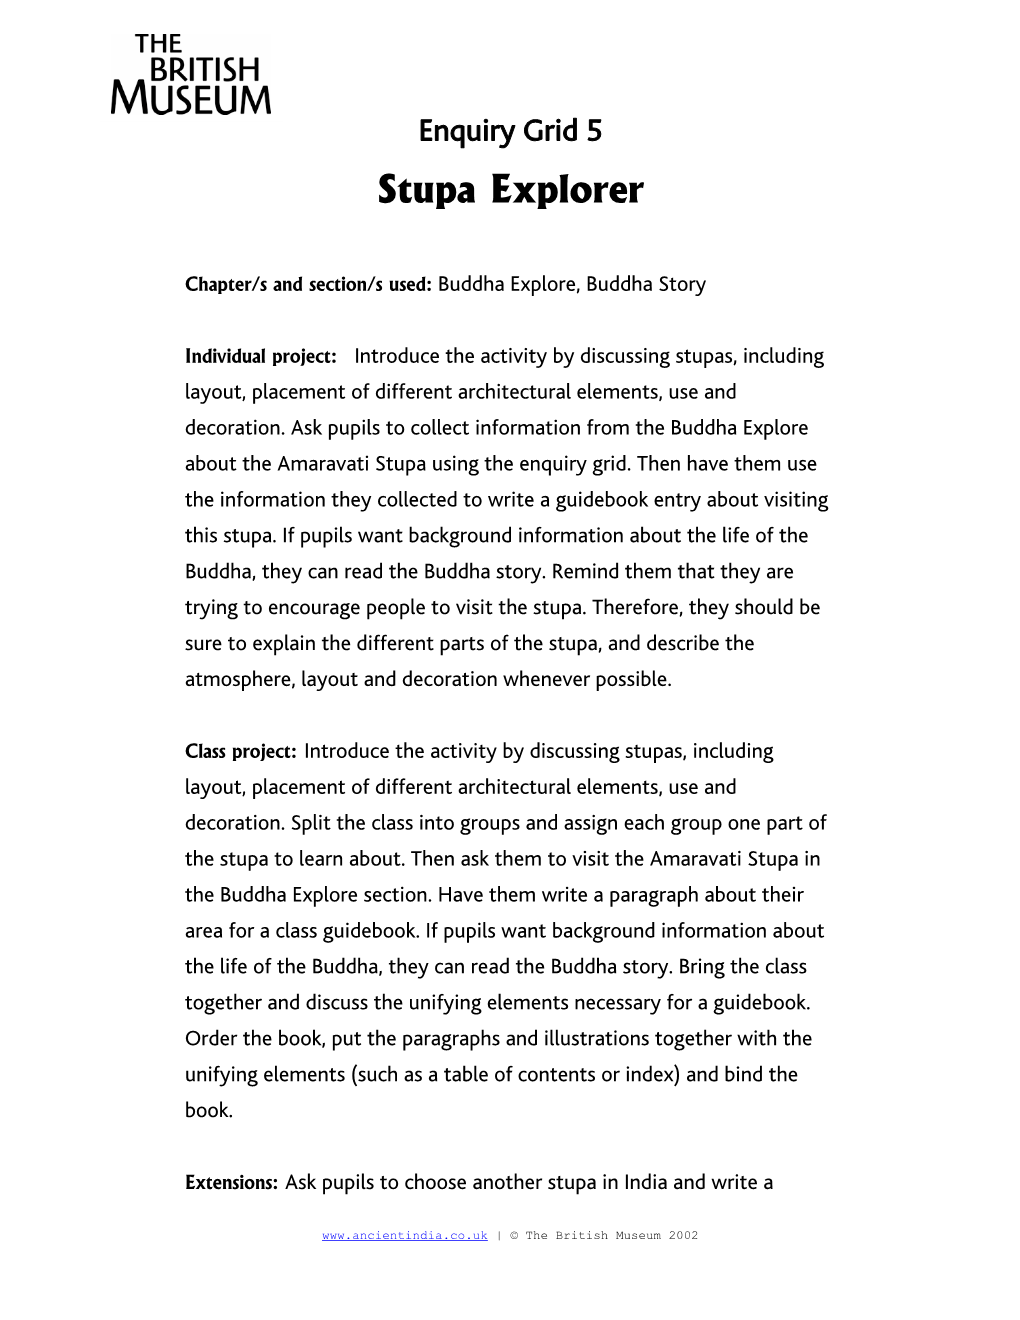 Stupa Explorer